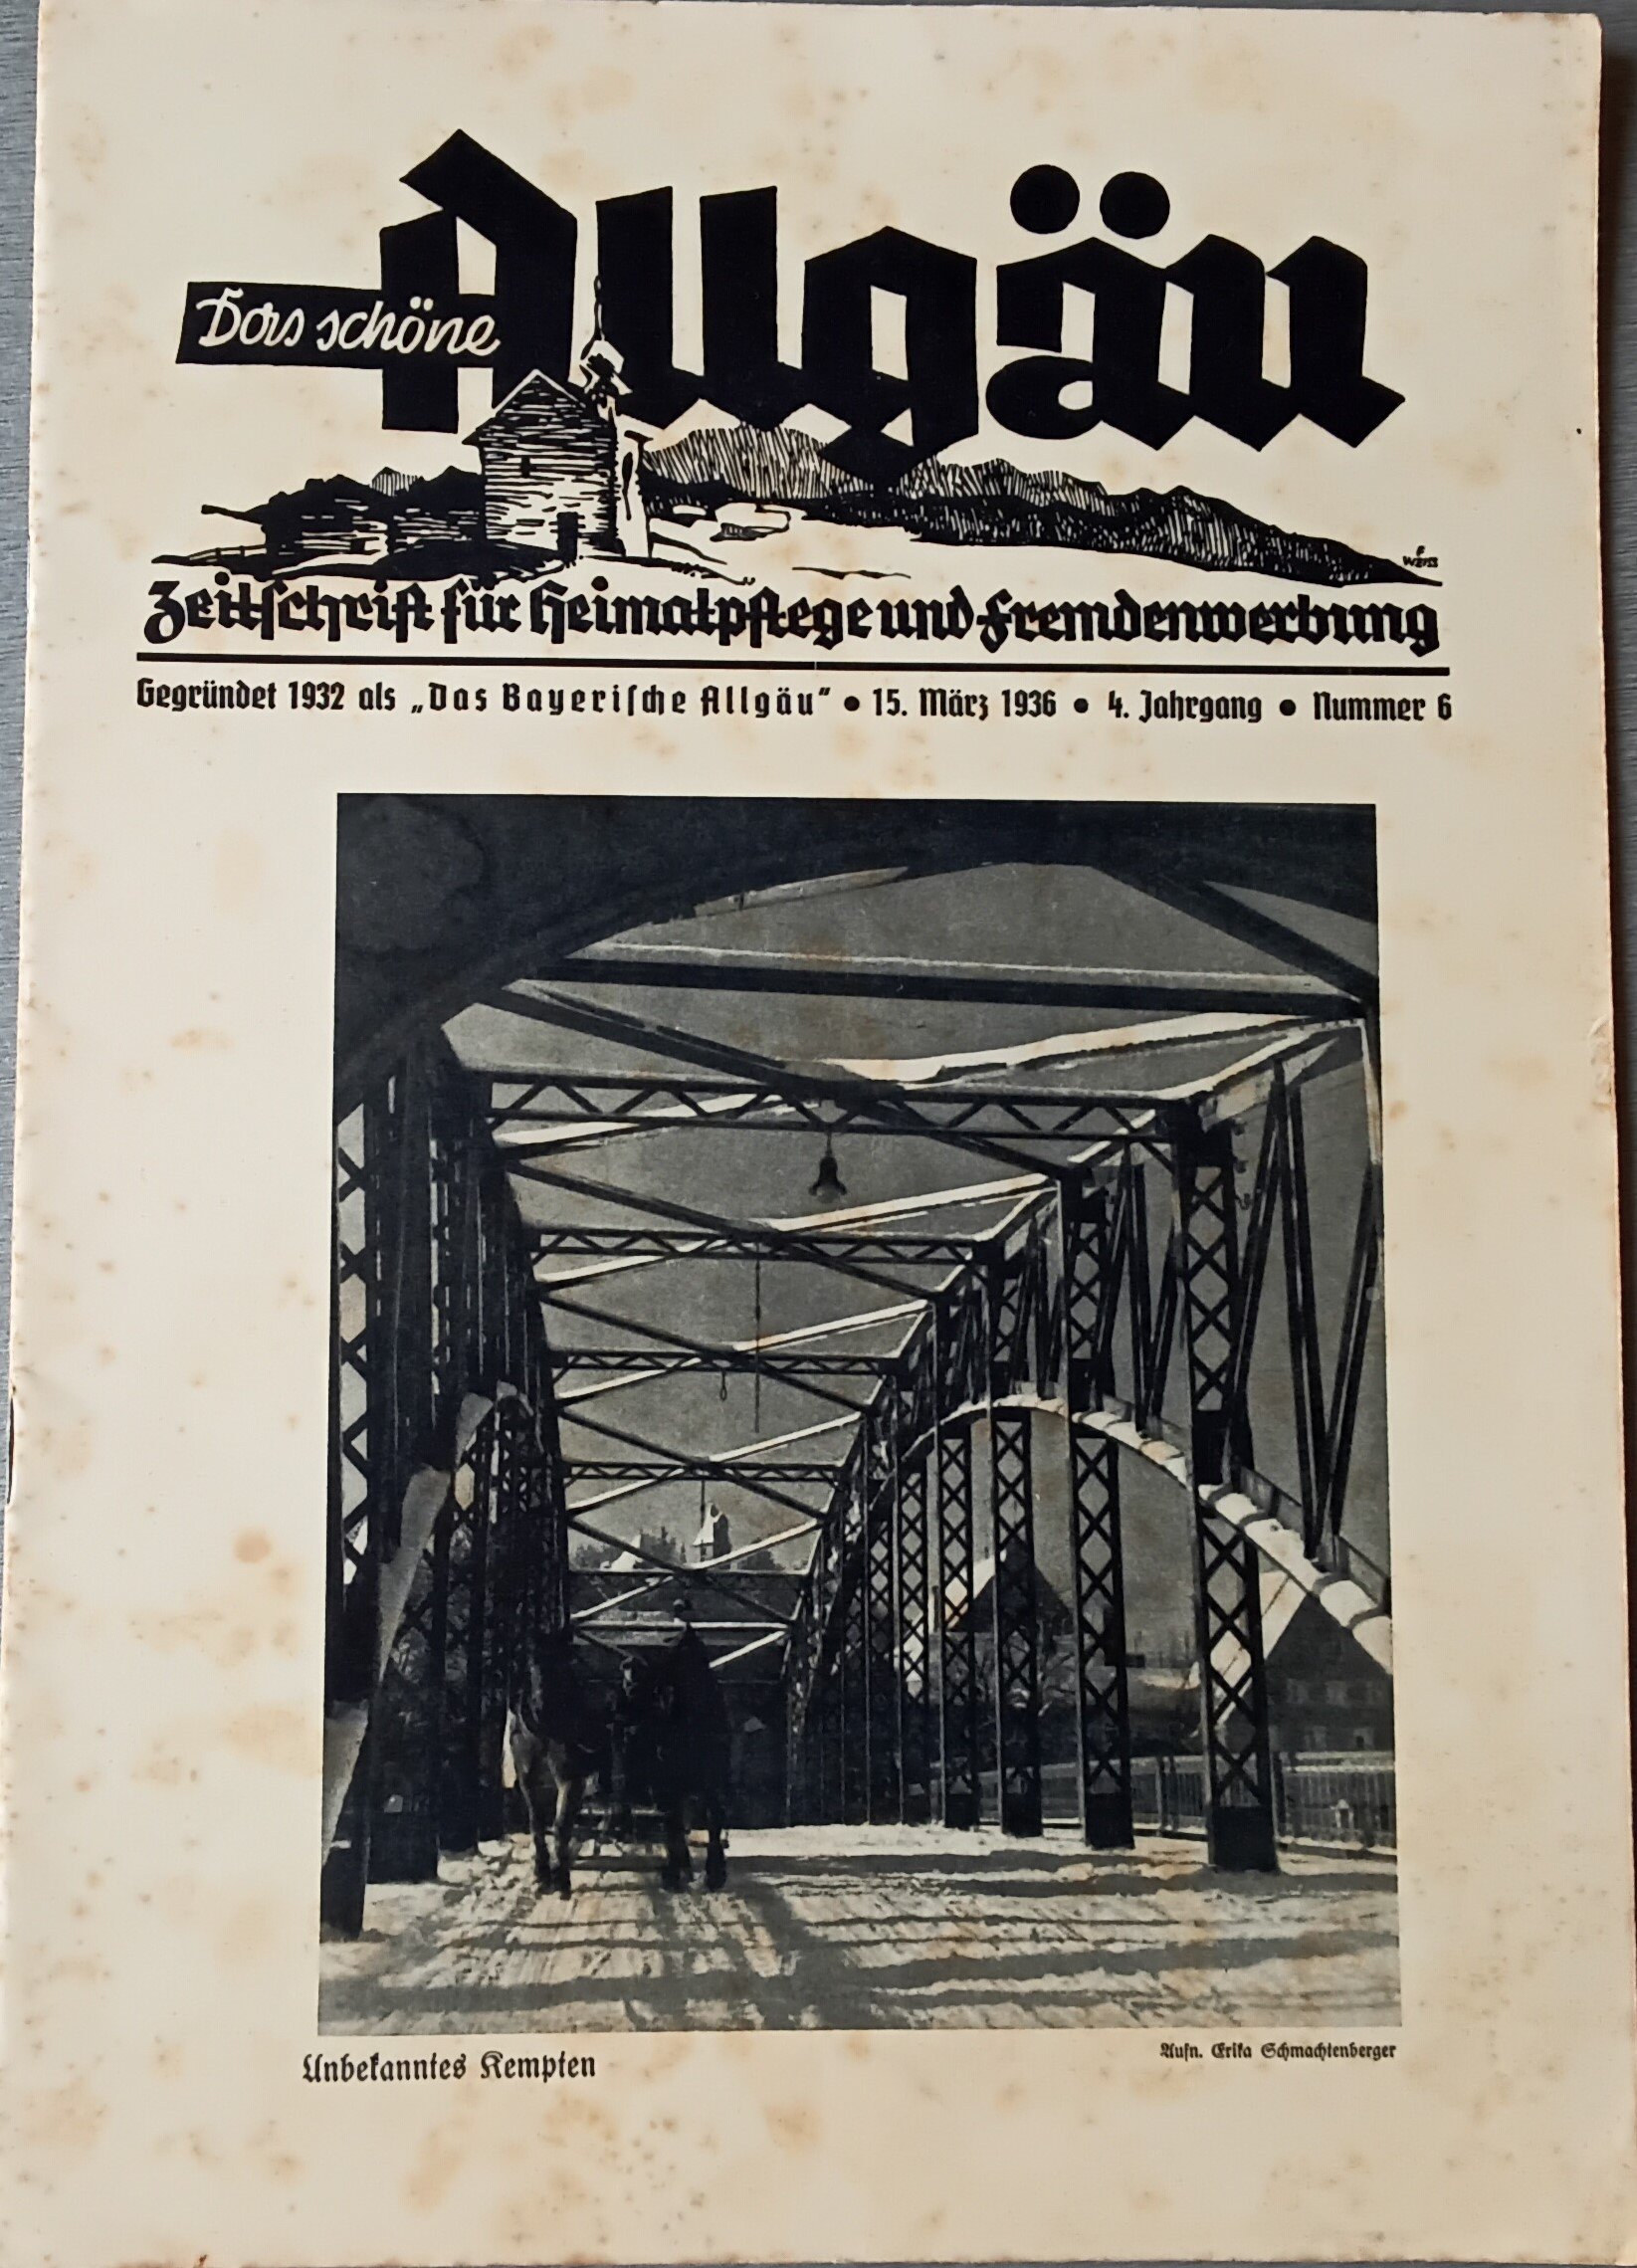 Das schöne Allgäu 1936 Heft 06 (Heimatmuseum Aichstetten CC BY-NC-SA)